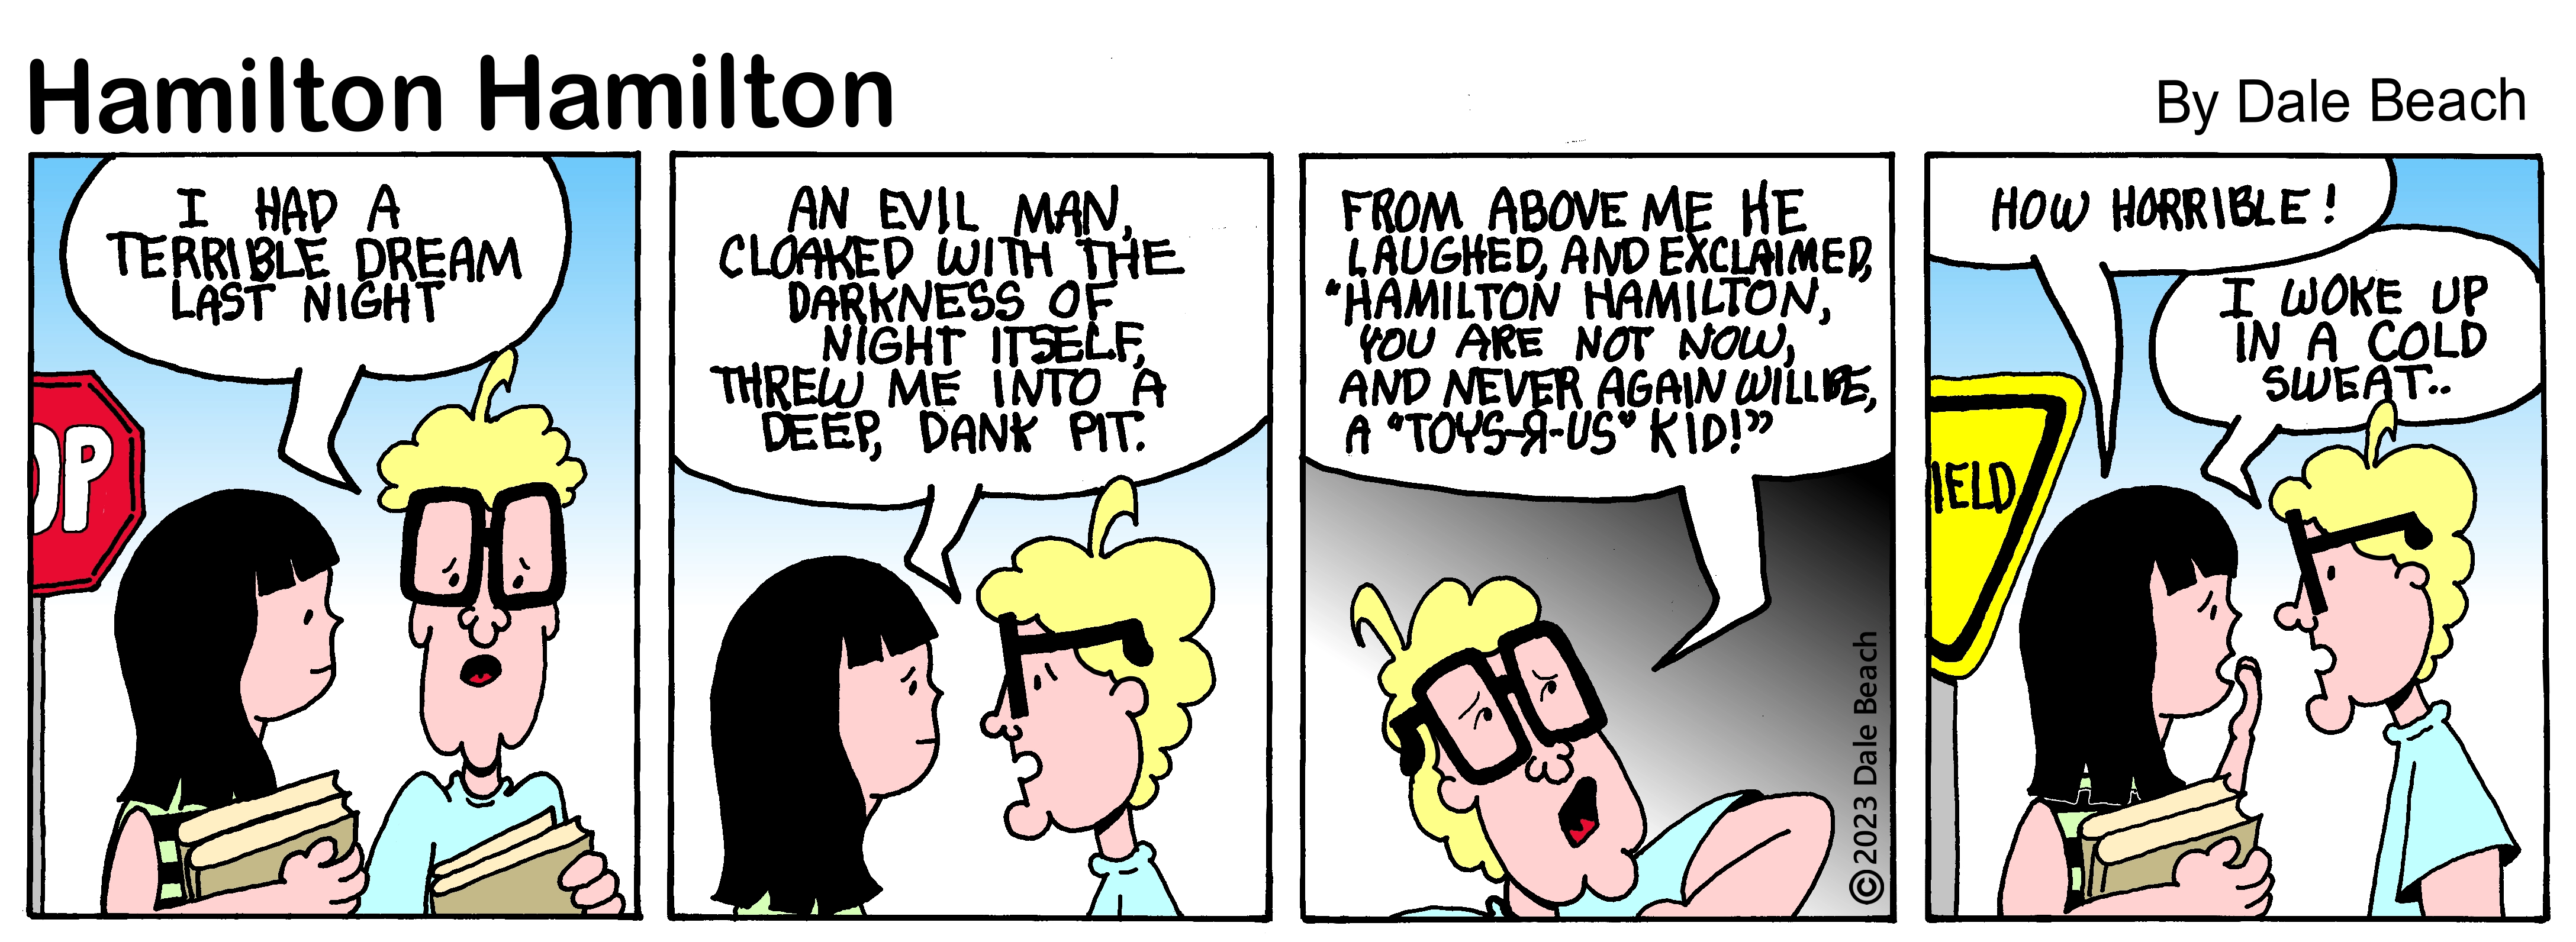 Hamilton Hamilton cartoon strip